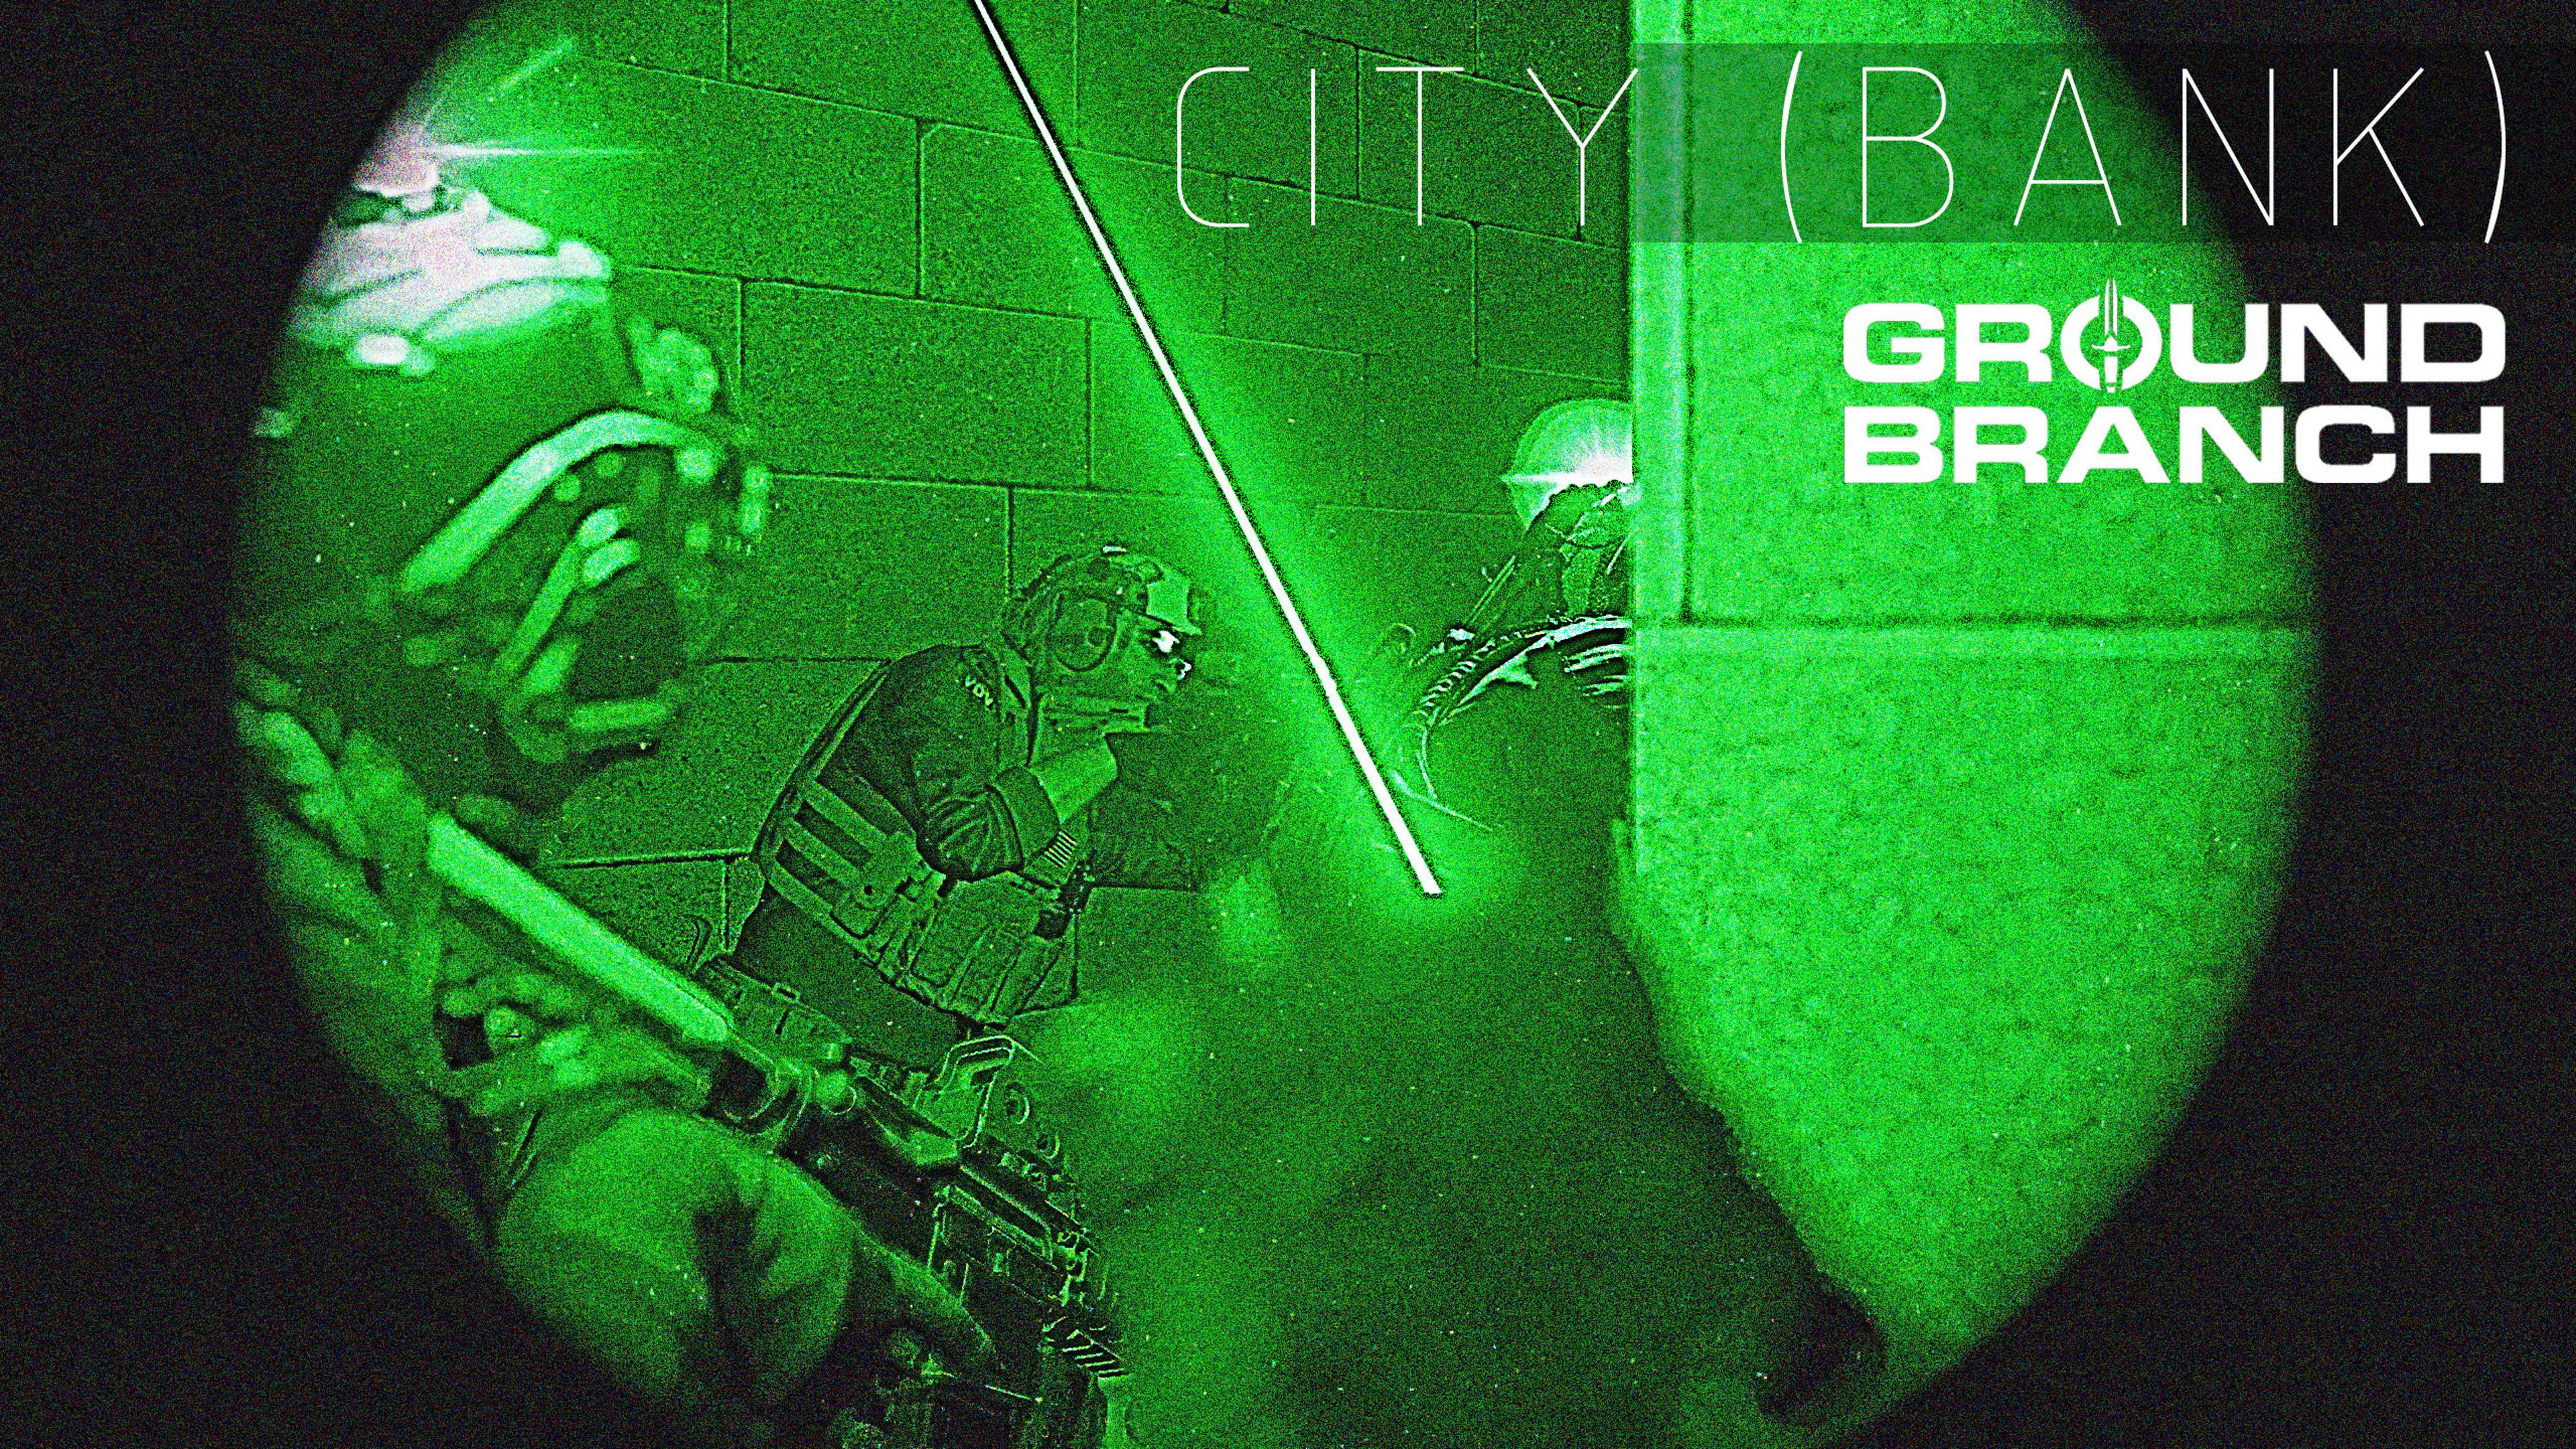 Ground Branch ‧ City (Bank) ‧ Terrorist hunt ‧ 89th FRP USMC